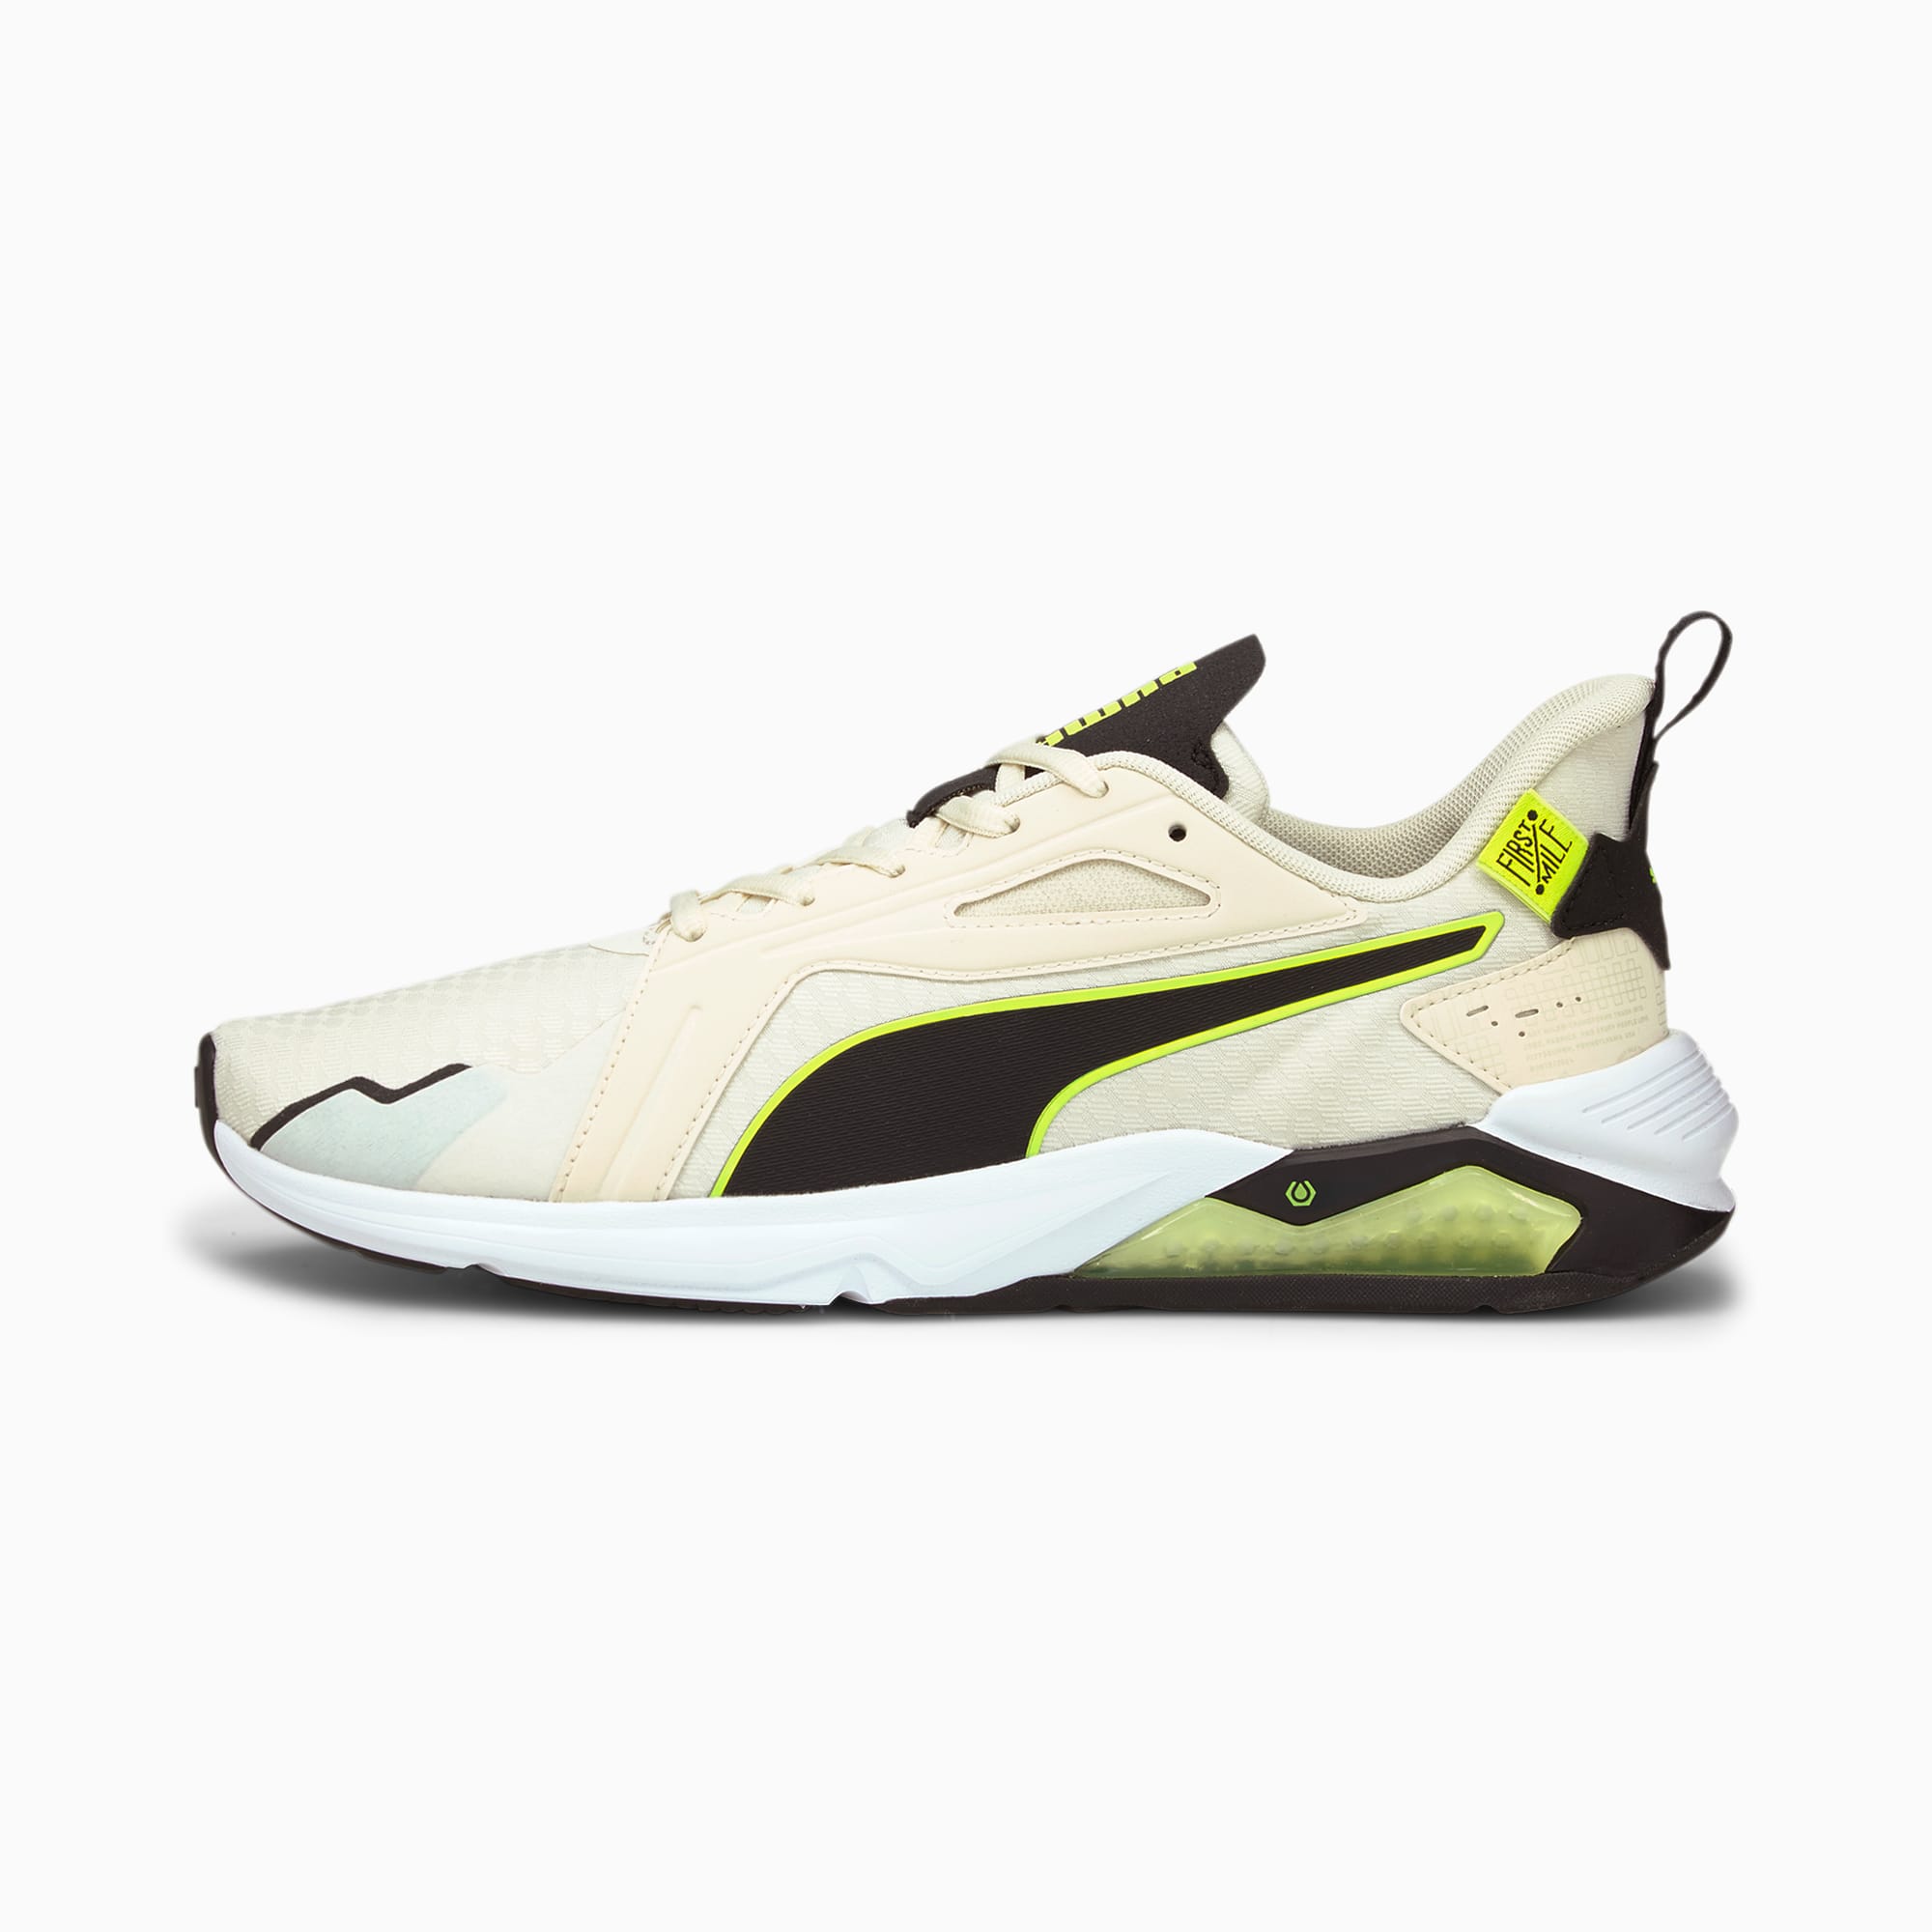 Chaussures de sport PUMA x FIRST MILE LQDCELL Method homme, Blanc/Noir/Jaune, Taille 44, Chaussures